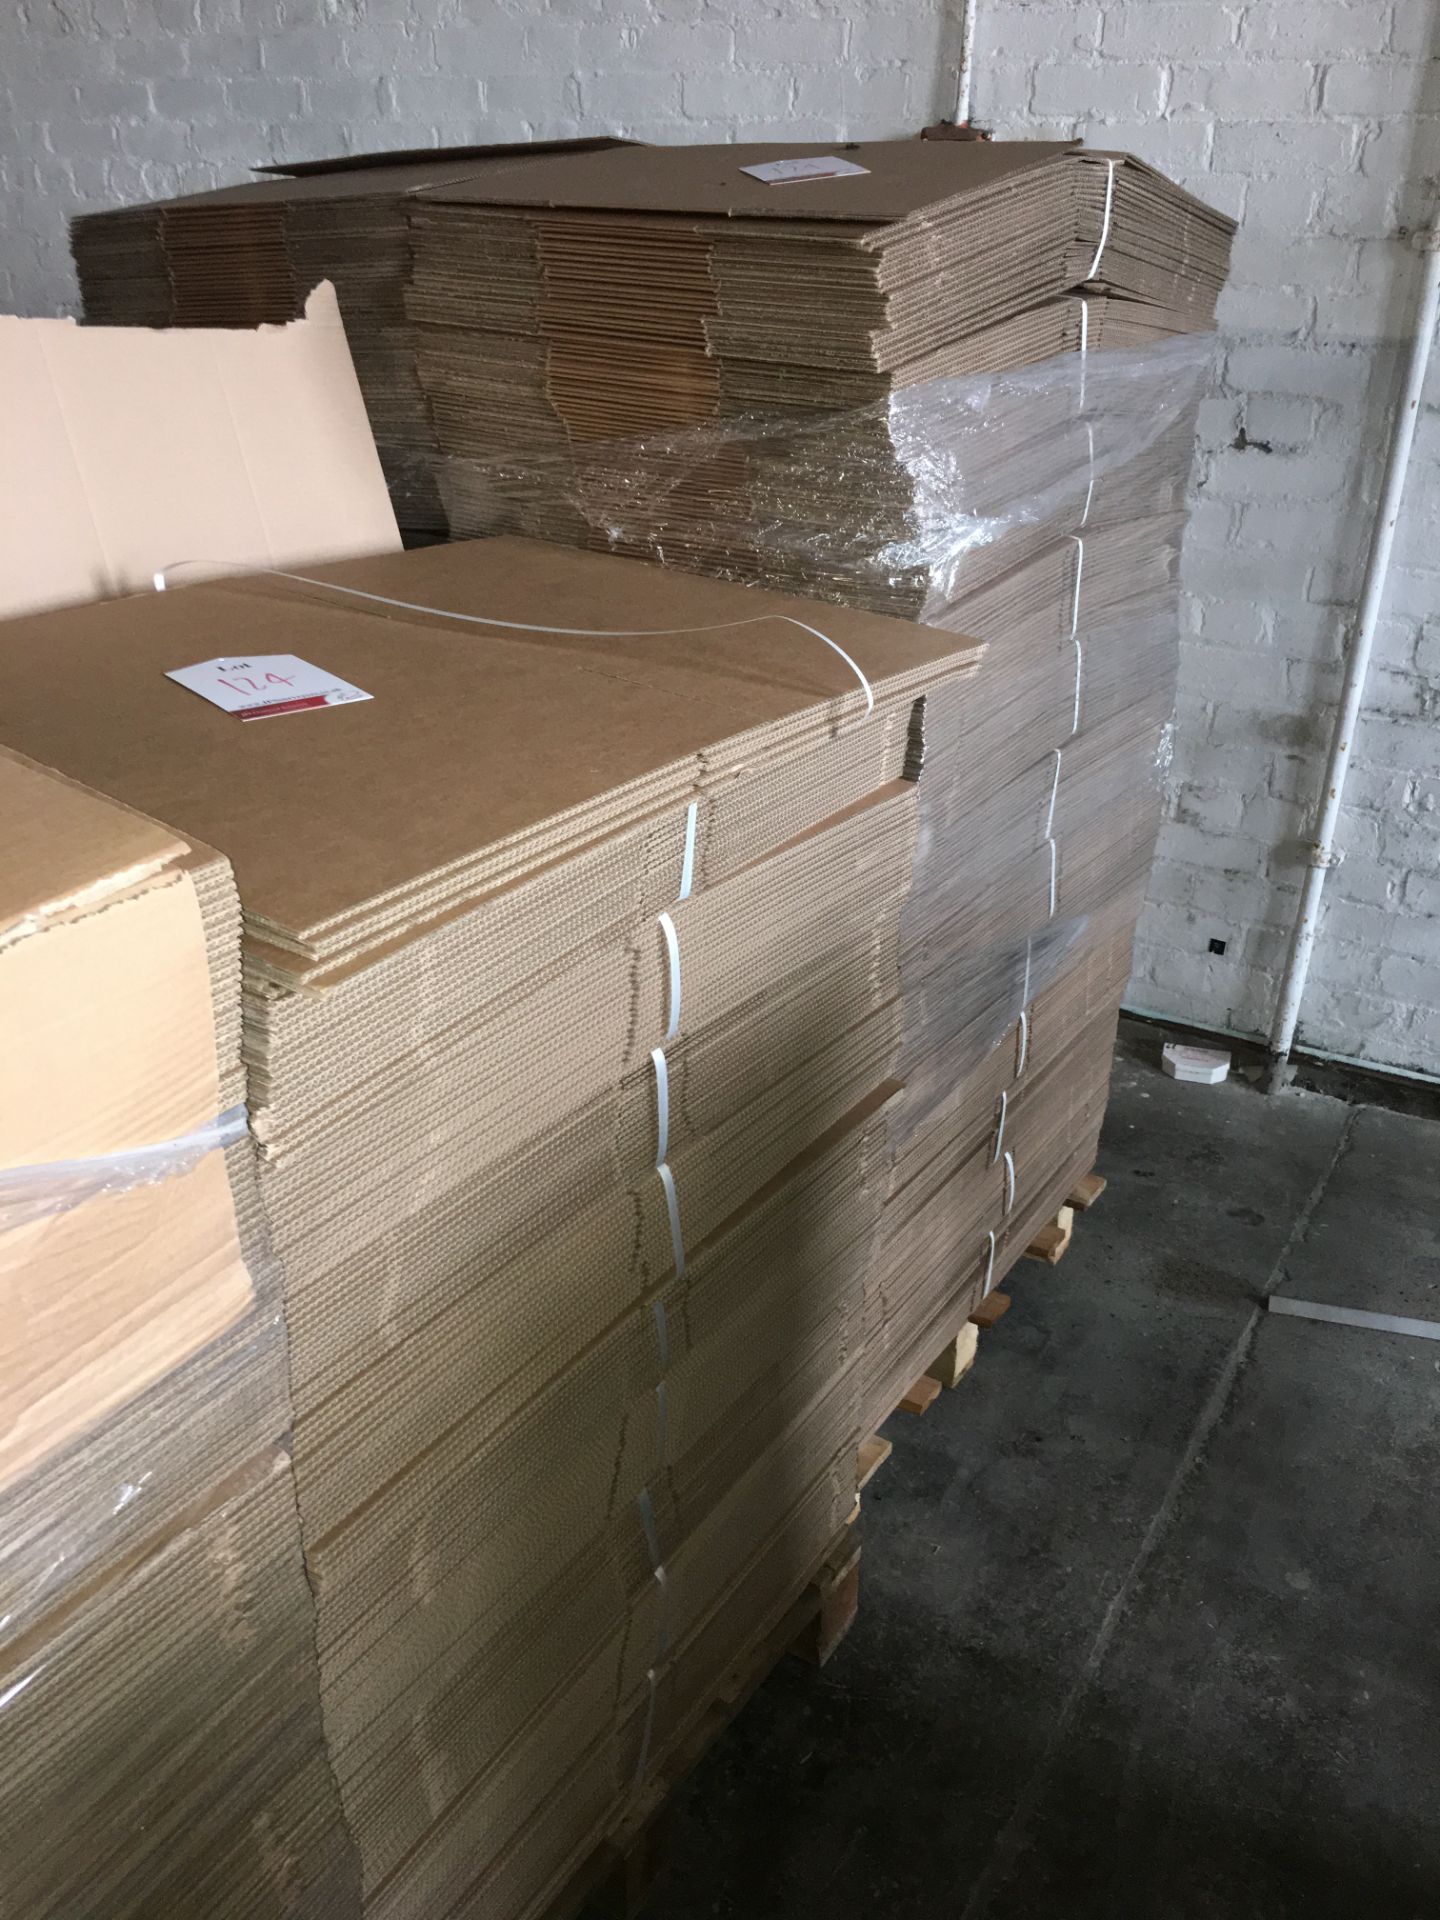 3 x Pallets of Cardboard 'Burger Bun' Boxes - 483mm x 383mm x 202mm - Image 3 of 3